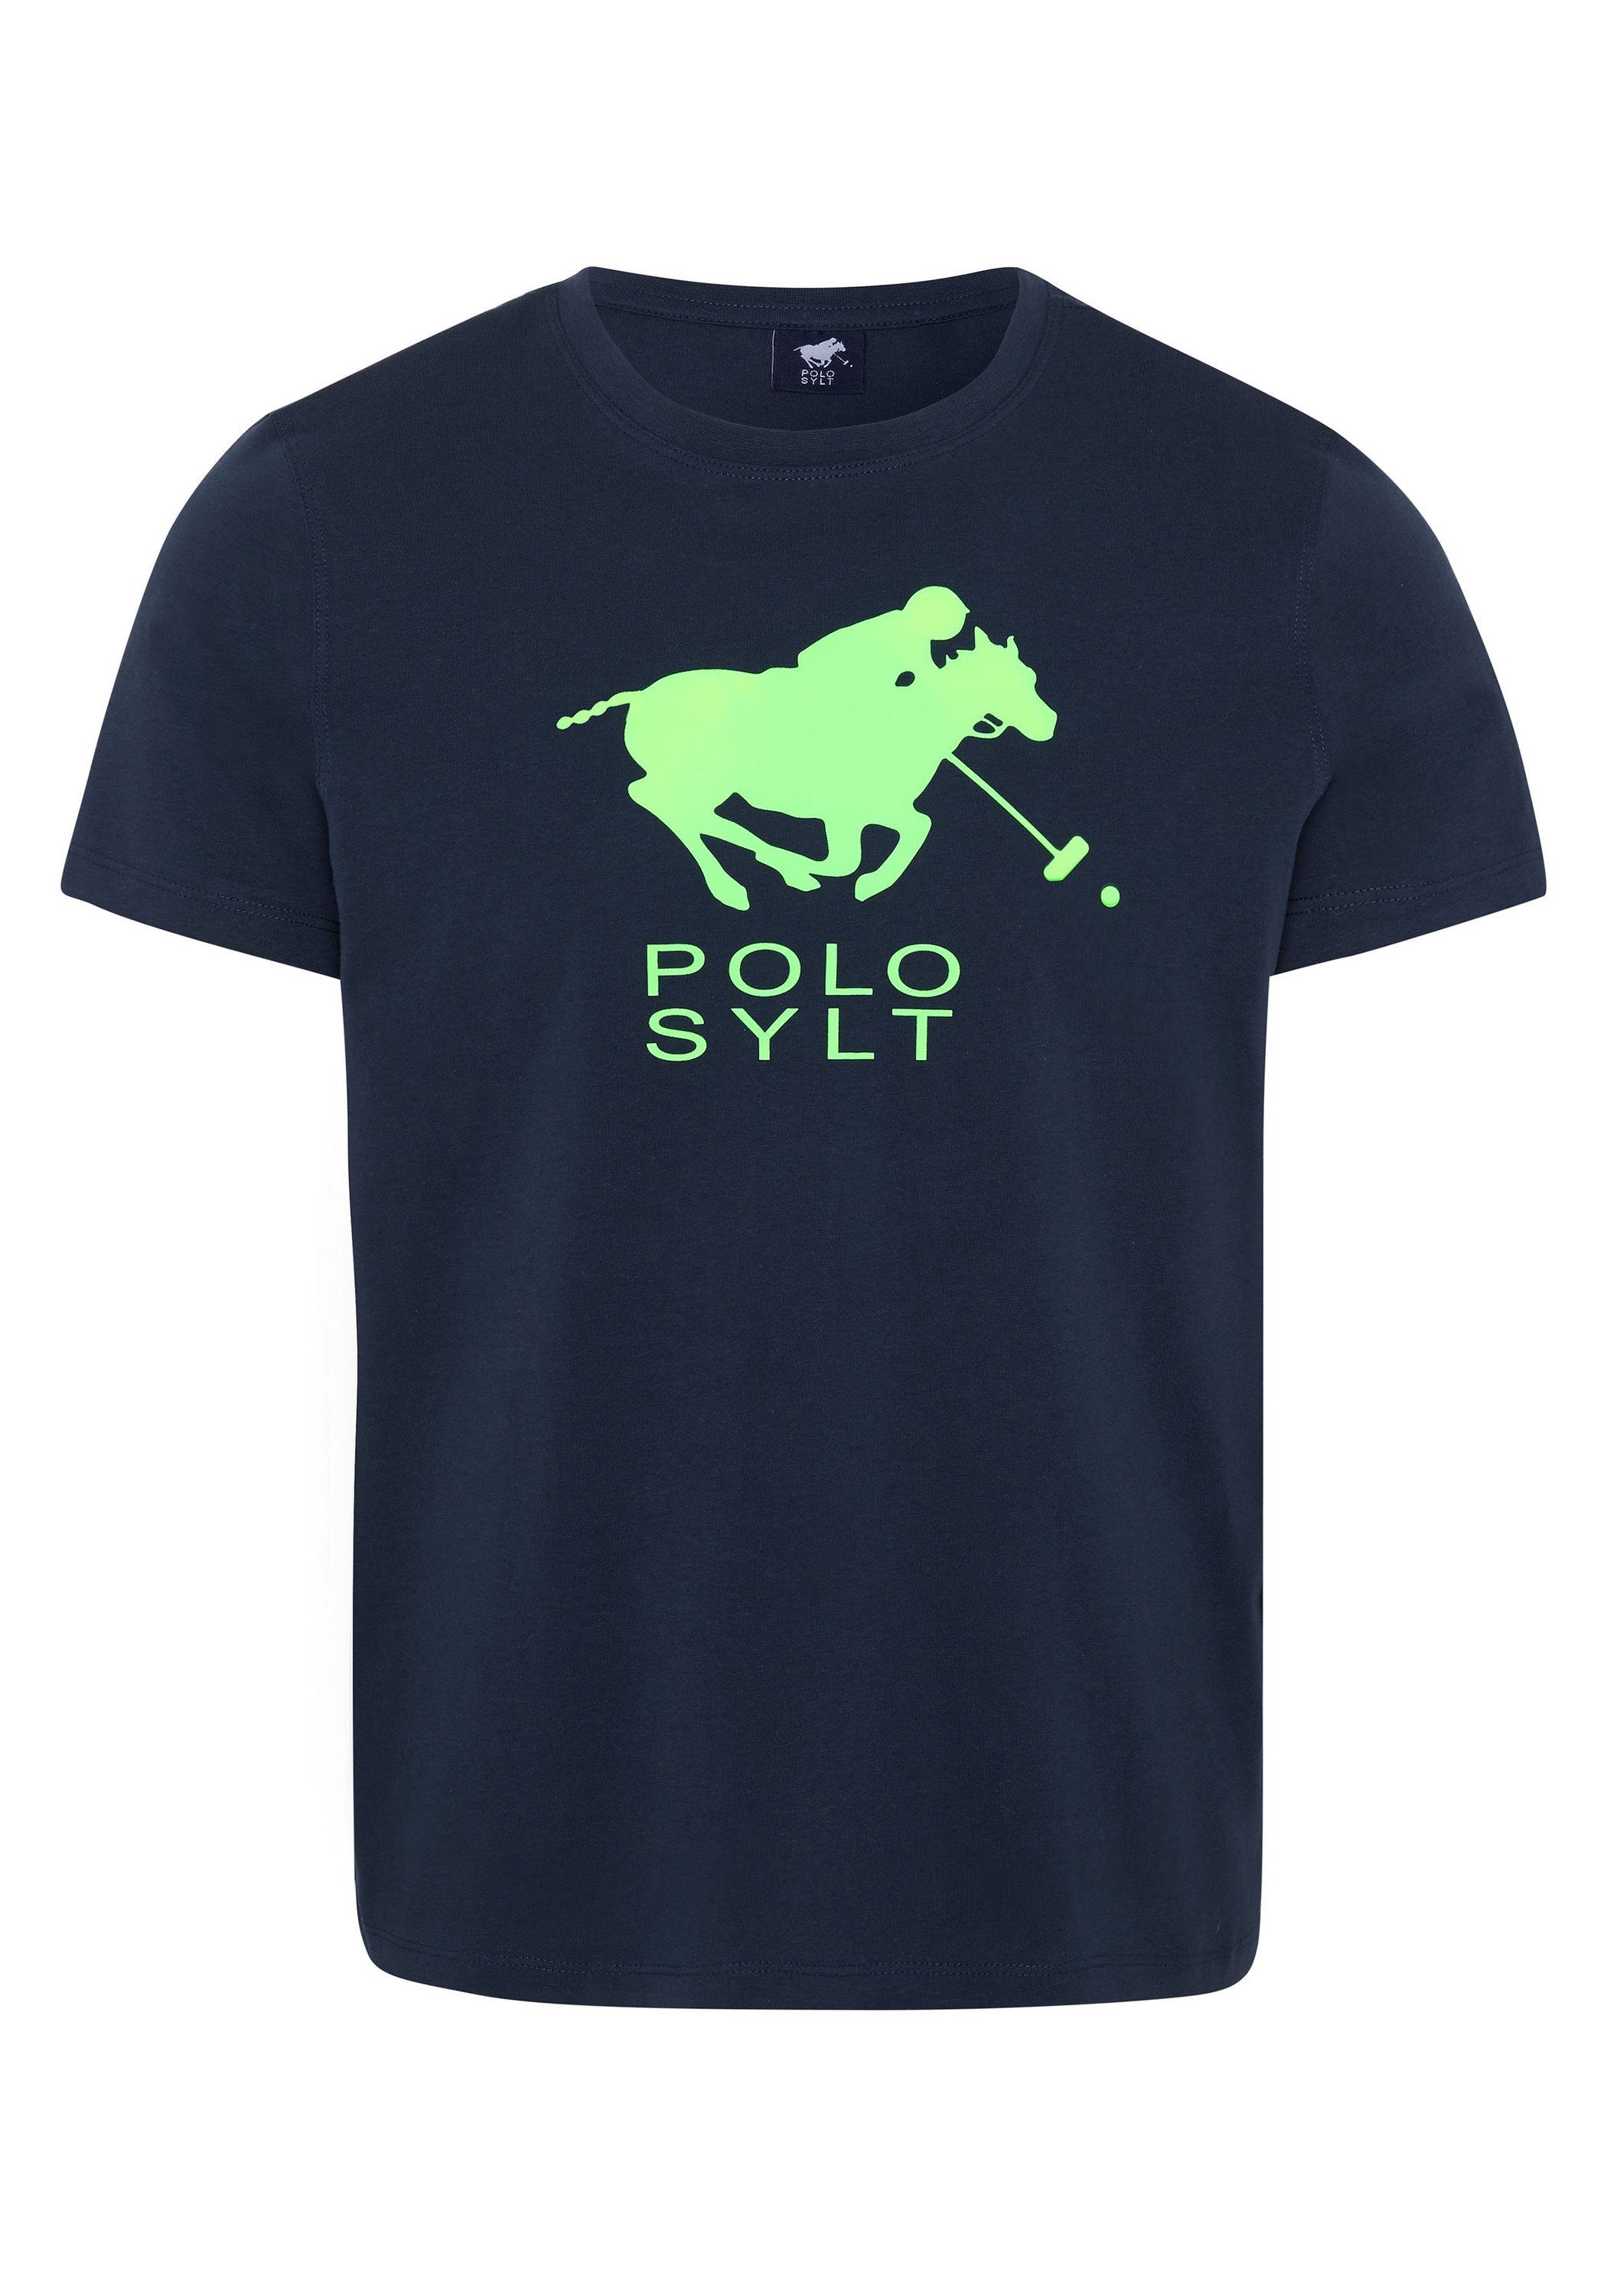 Polo Sylt Print-Shirt mit Neon Logo Frontprint Total Eclipse